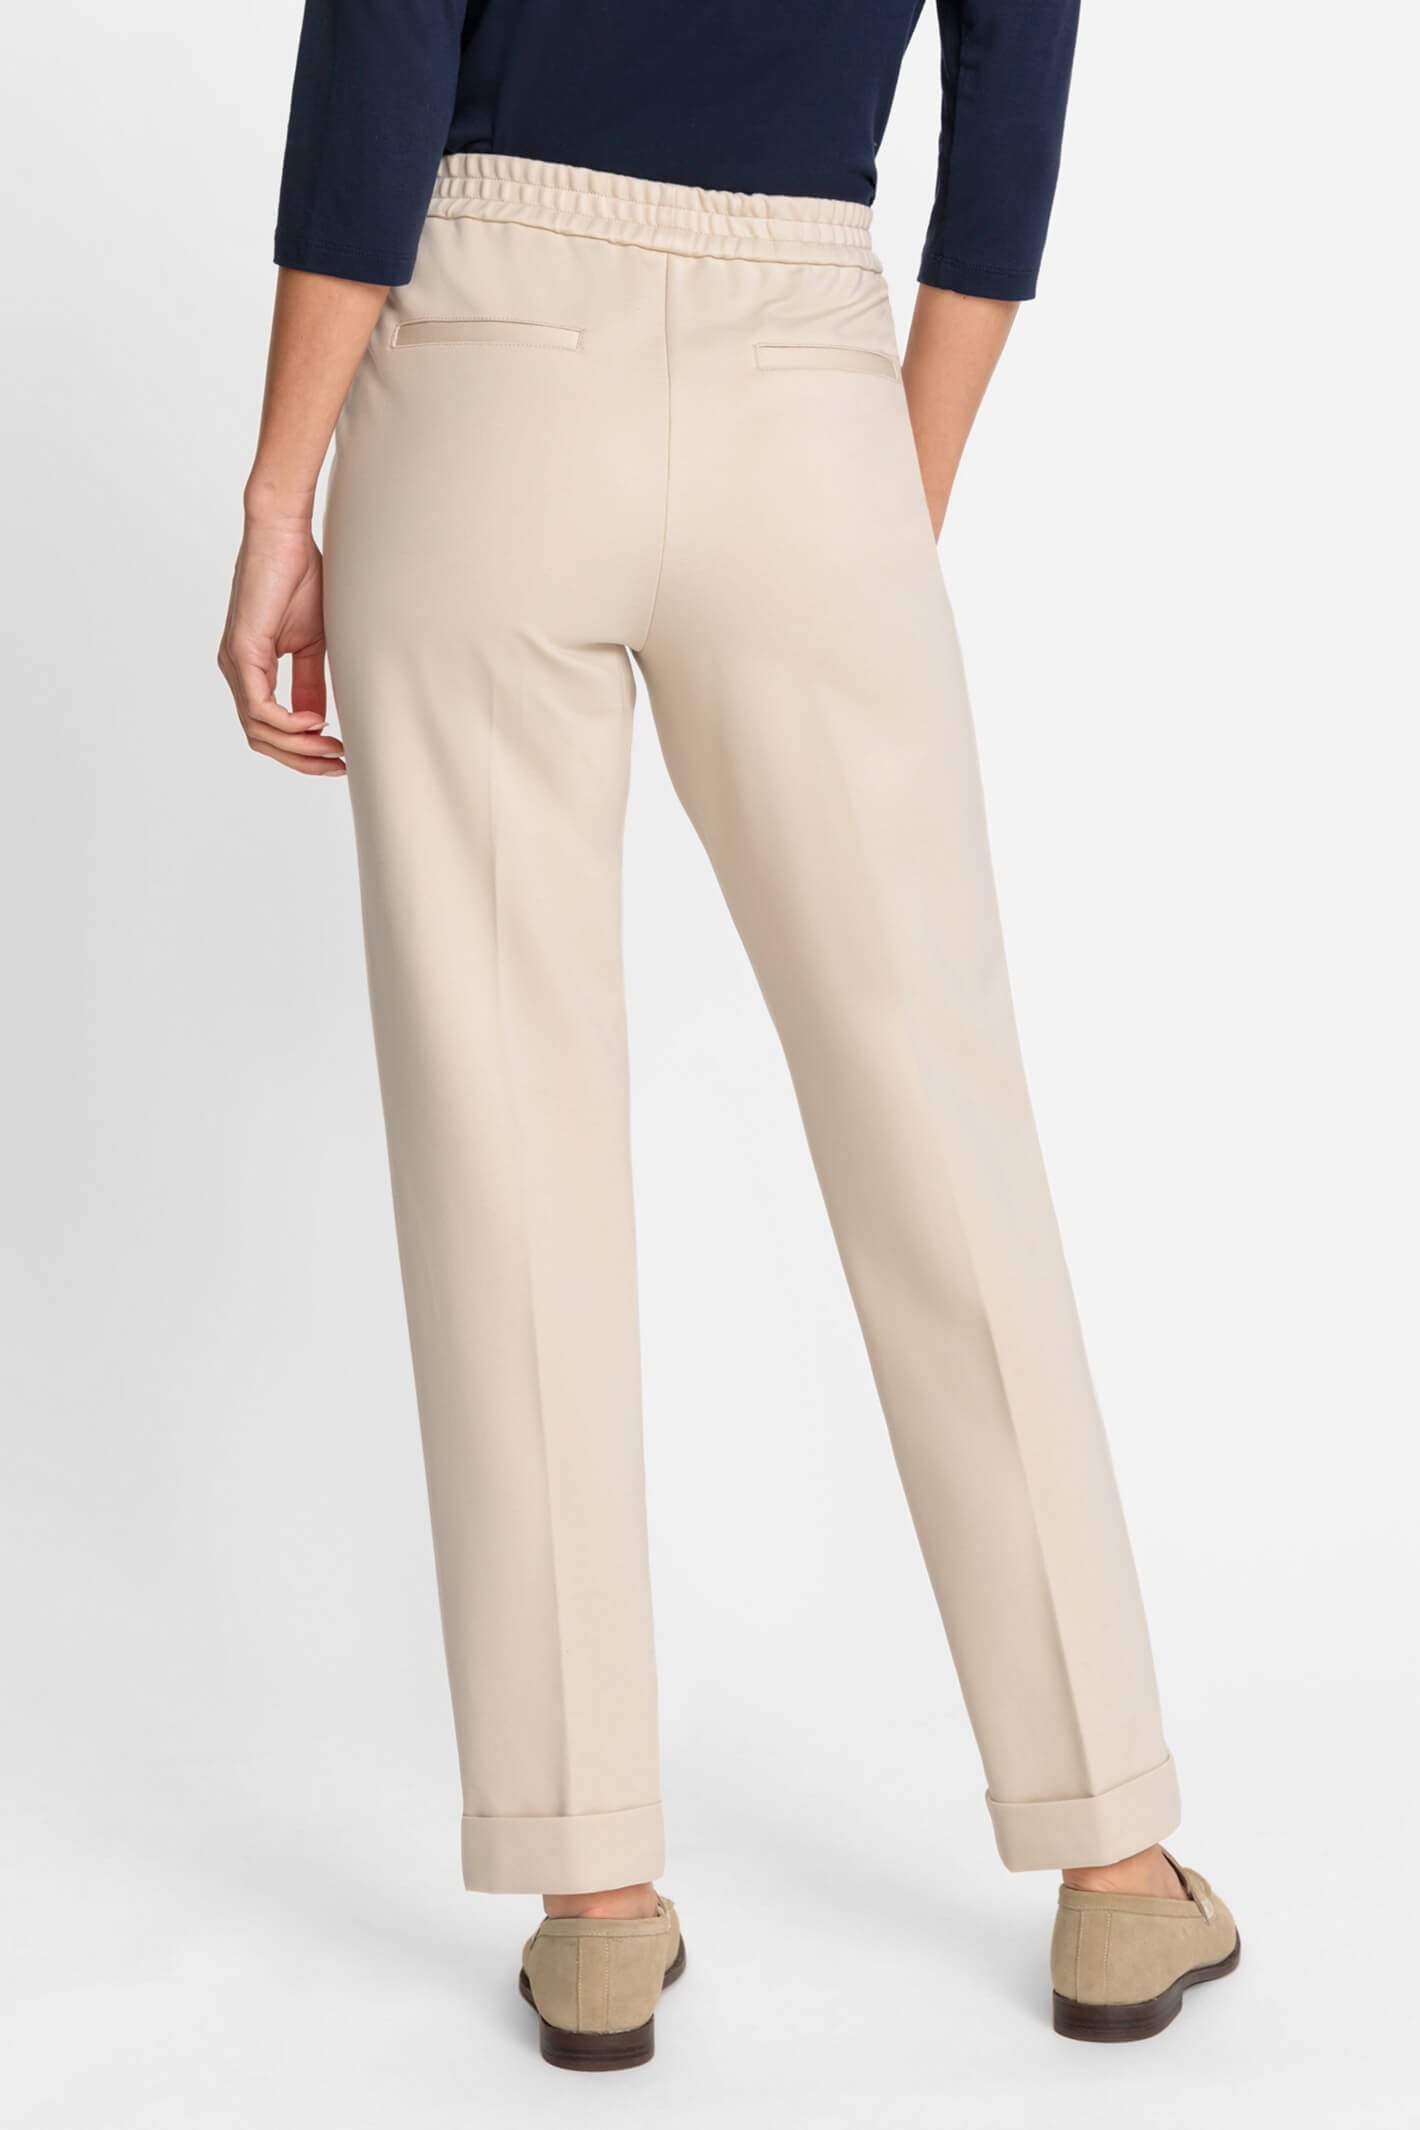 Olsen | Pants & Jumpsuits | Olsen Womens Cotton Blend Trousers | Poshmark